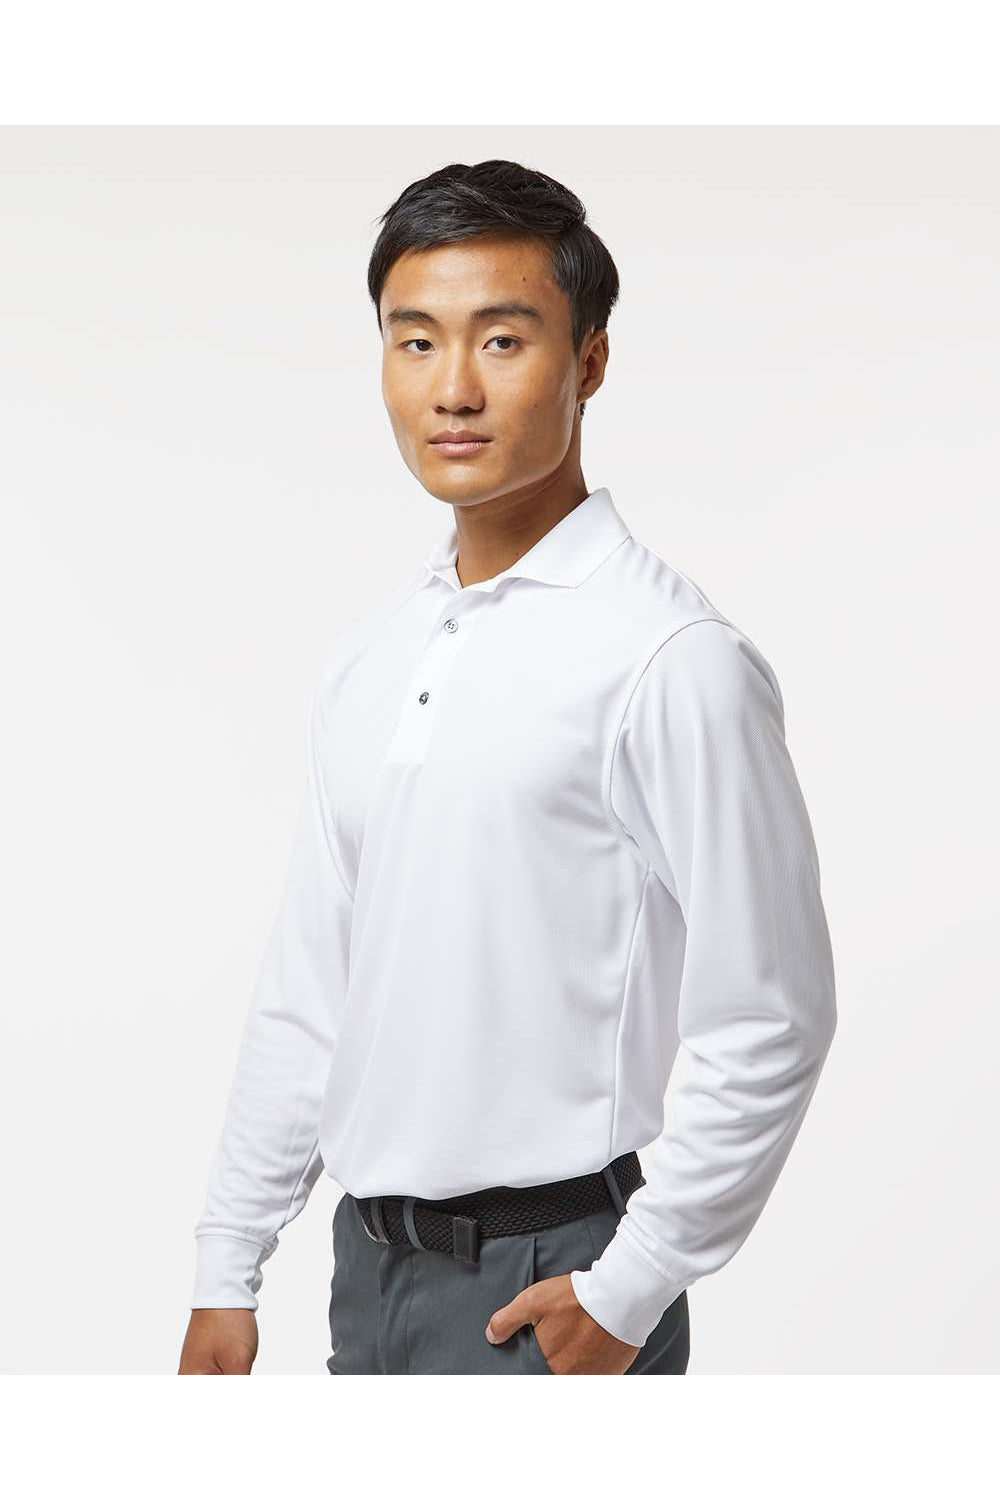 Paragon 110 Mens Prescott Long Sleeve Polo Shirt White Model Side